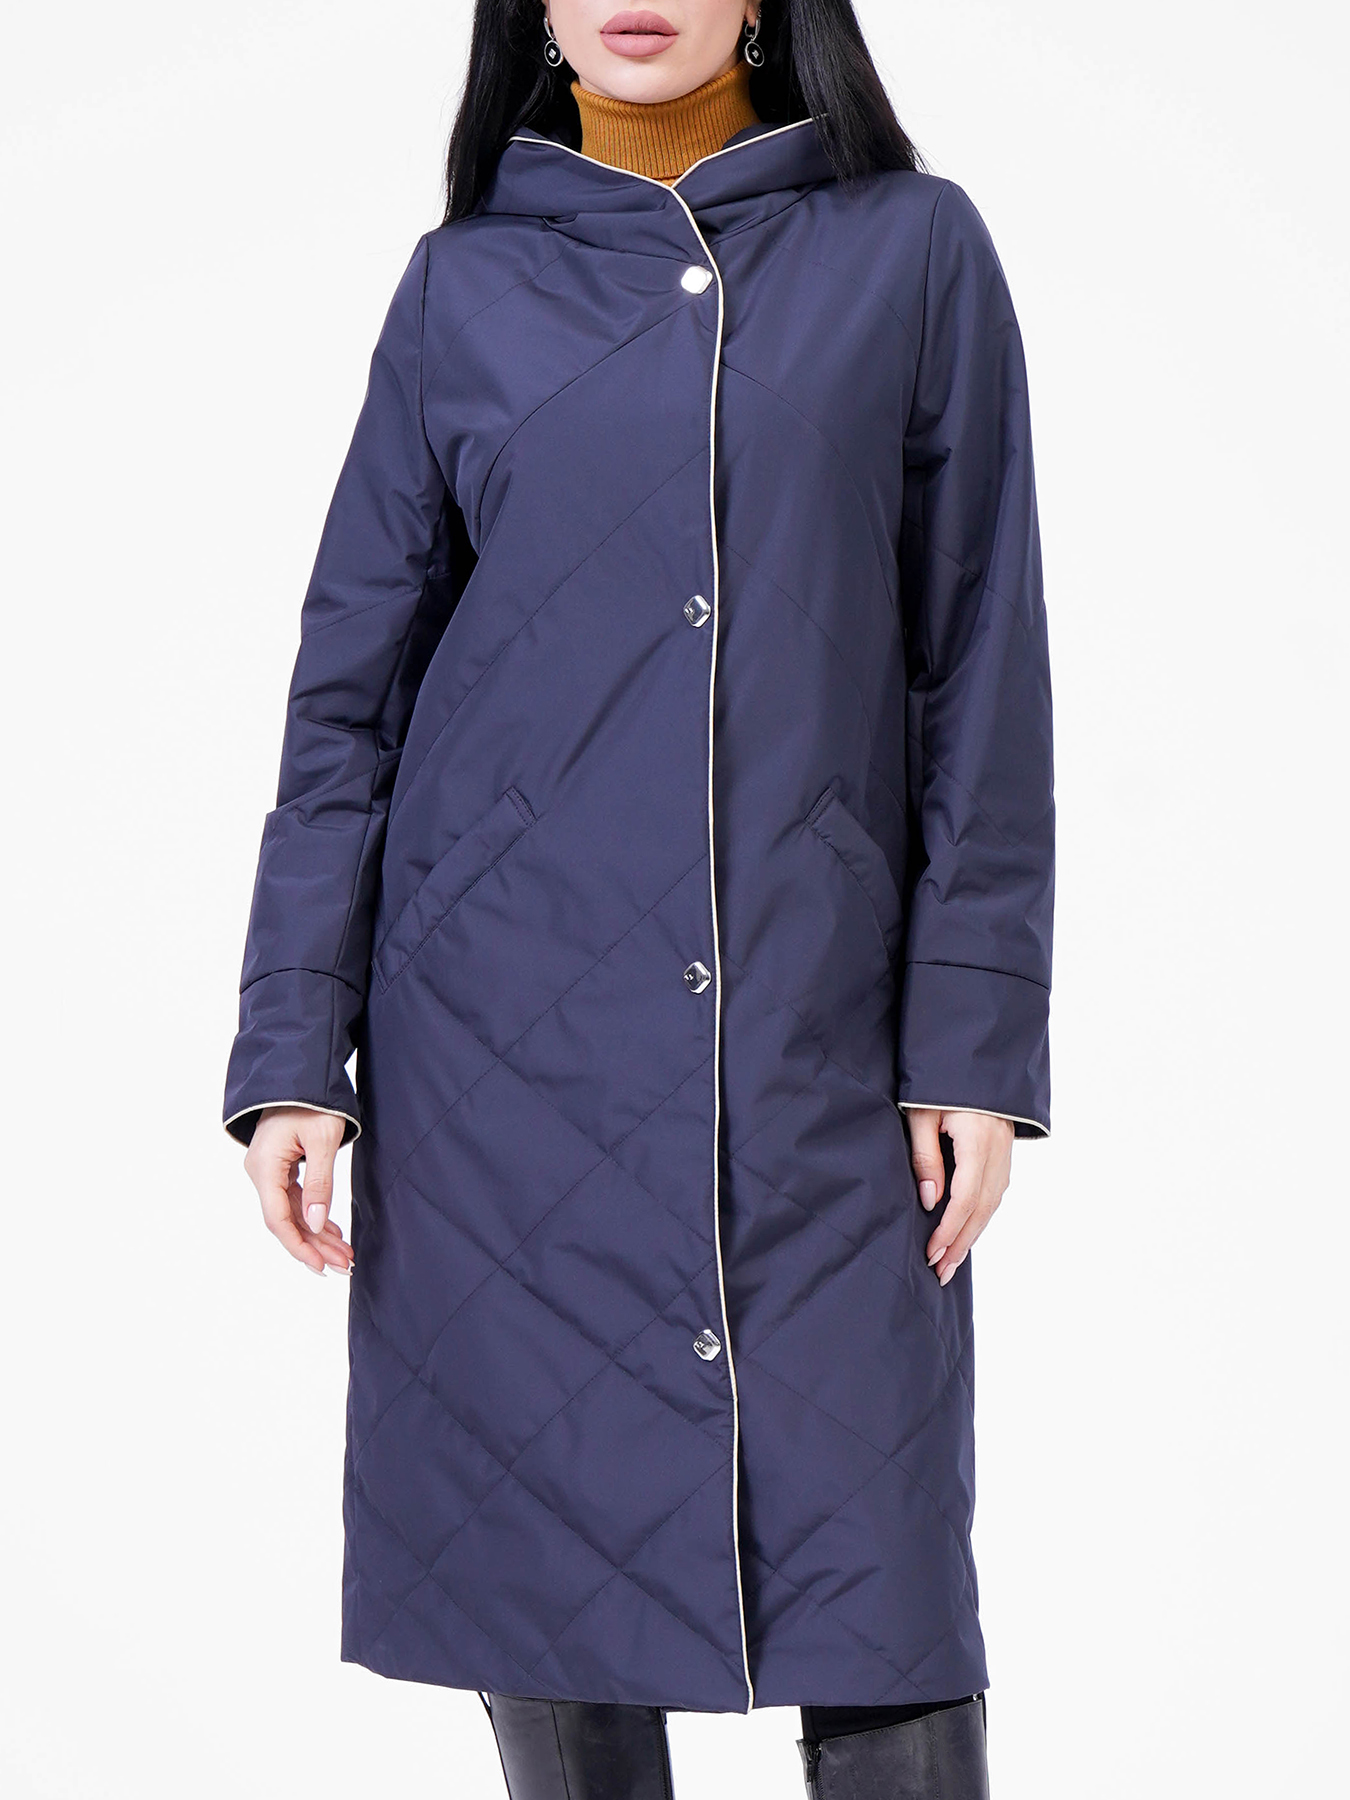 Пальто Maritta 418364-024, цвет темно-синий, размер 52 - фото 1